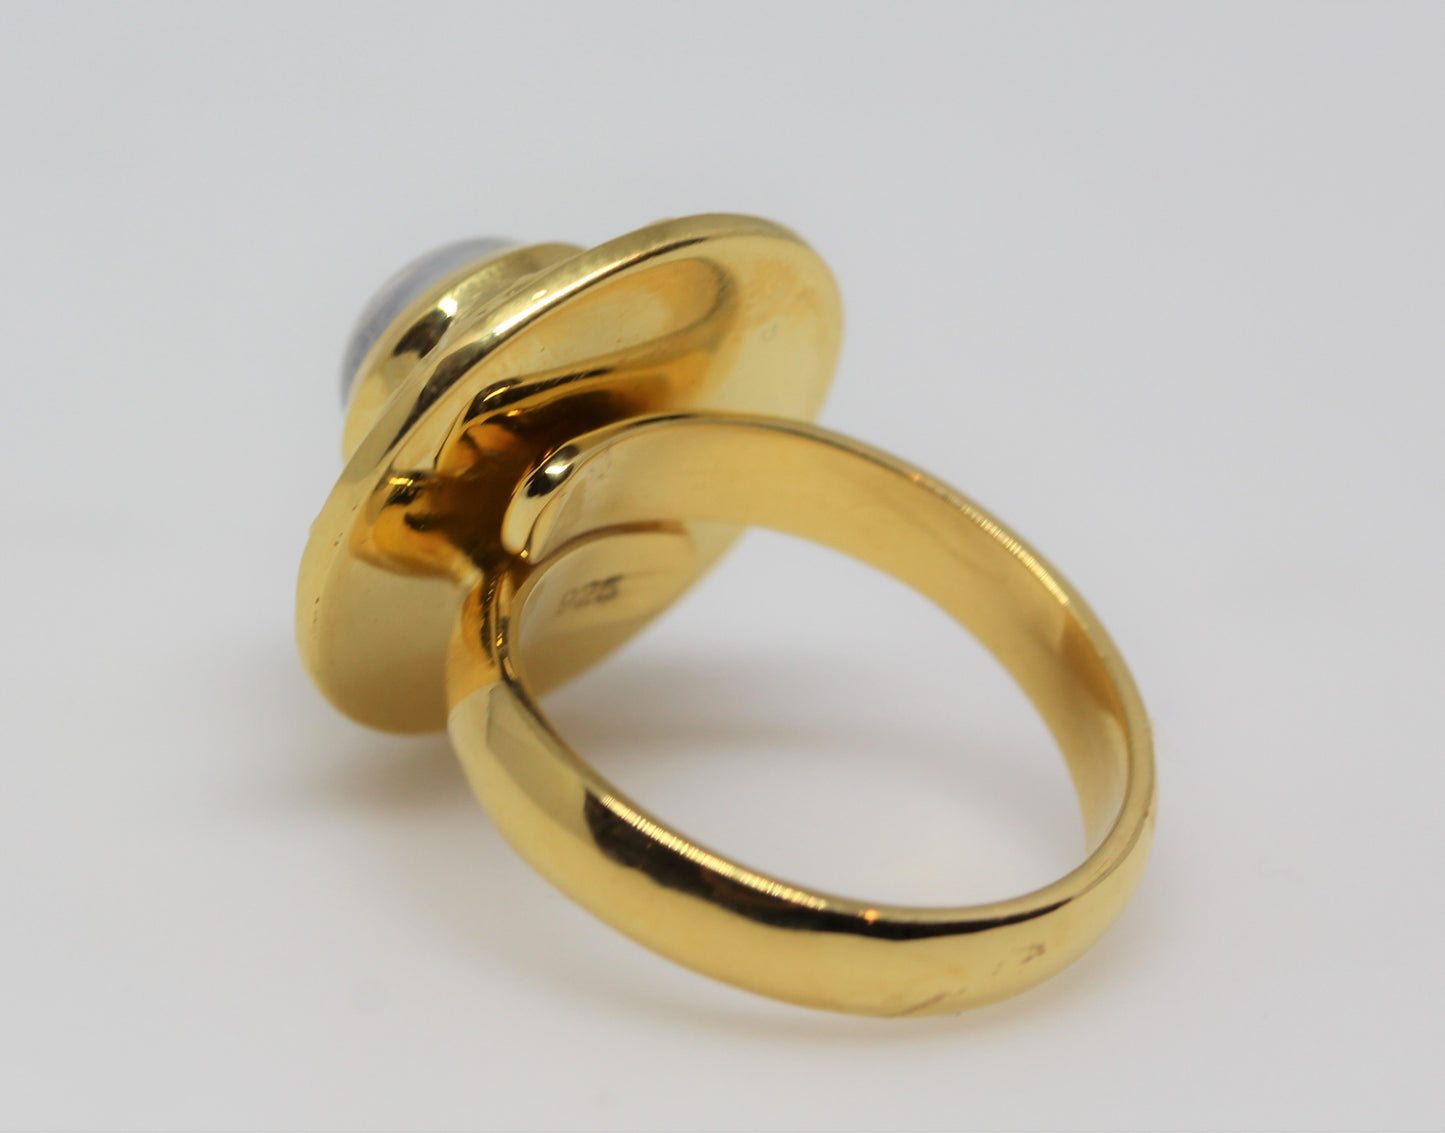 Moonstone Medallion Ring - 24k Gold Plated - Adjustable Size #275